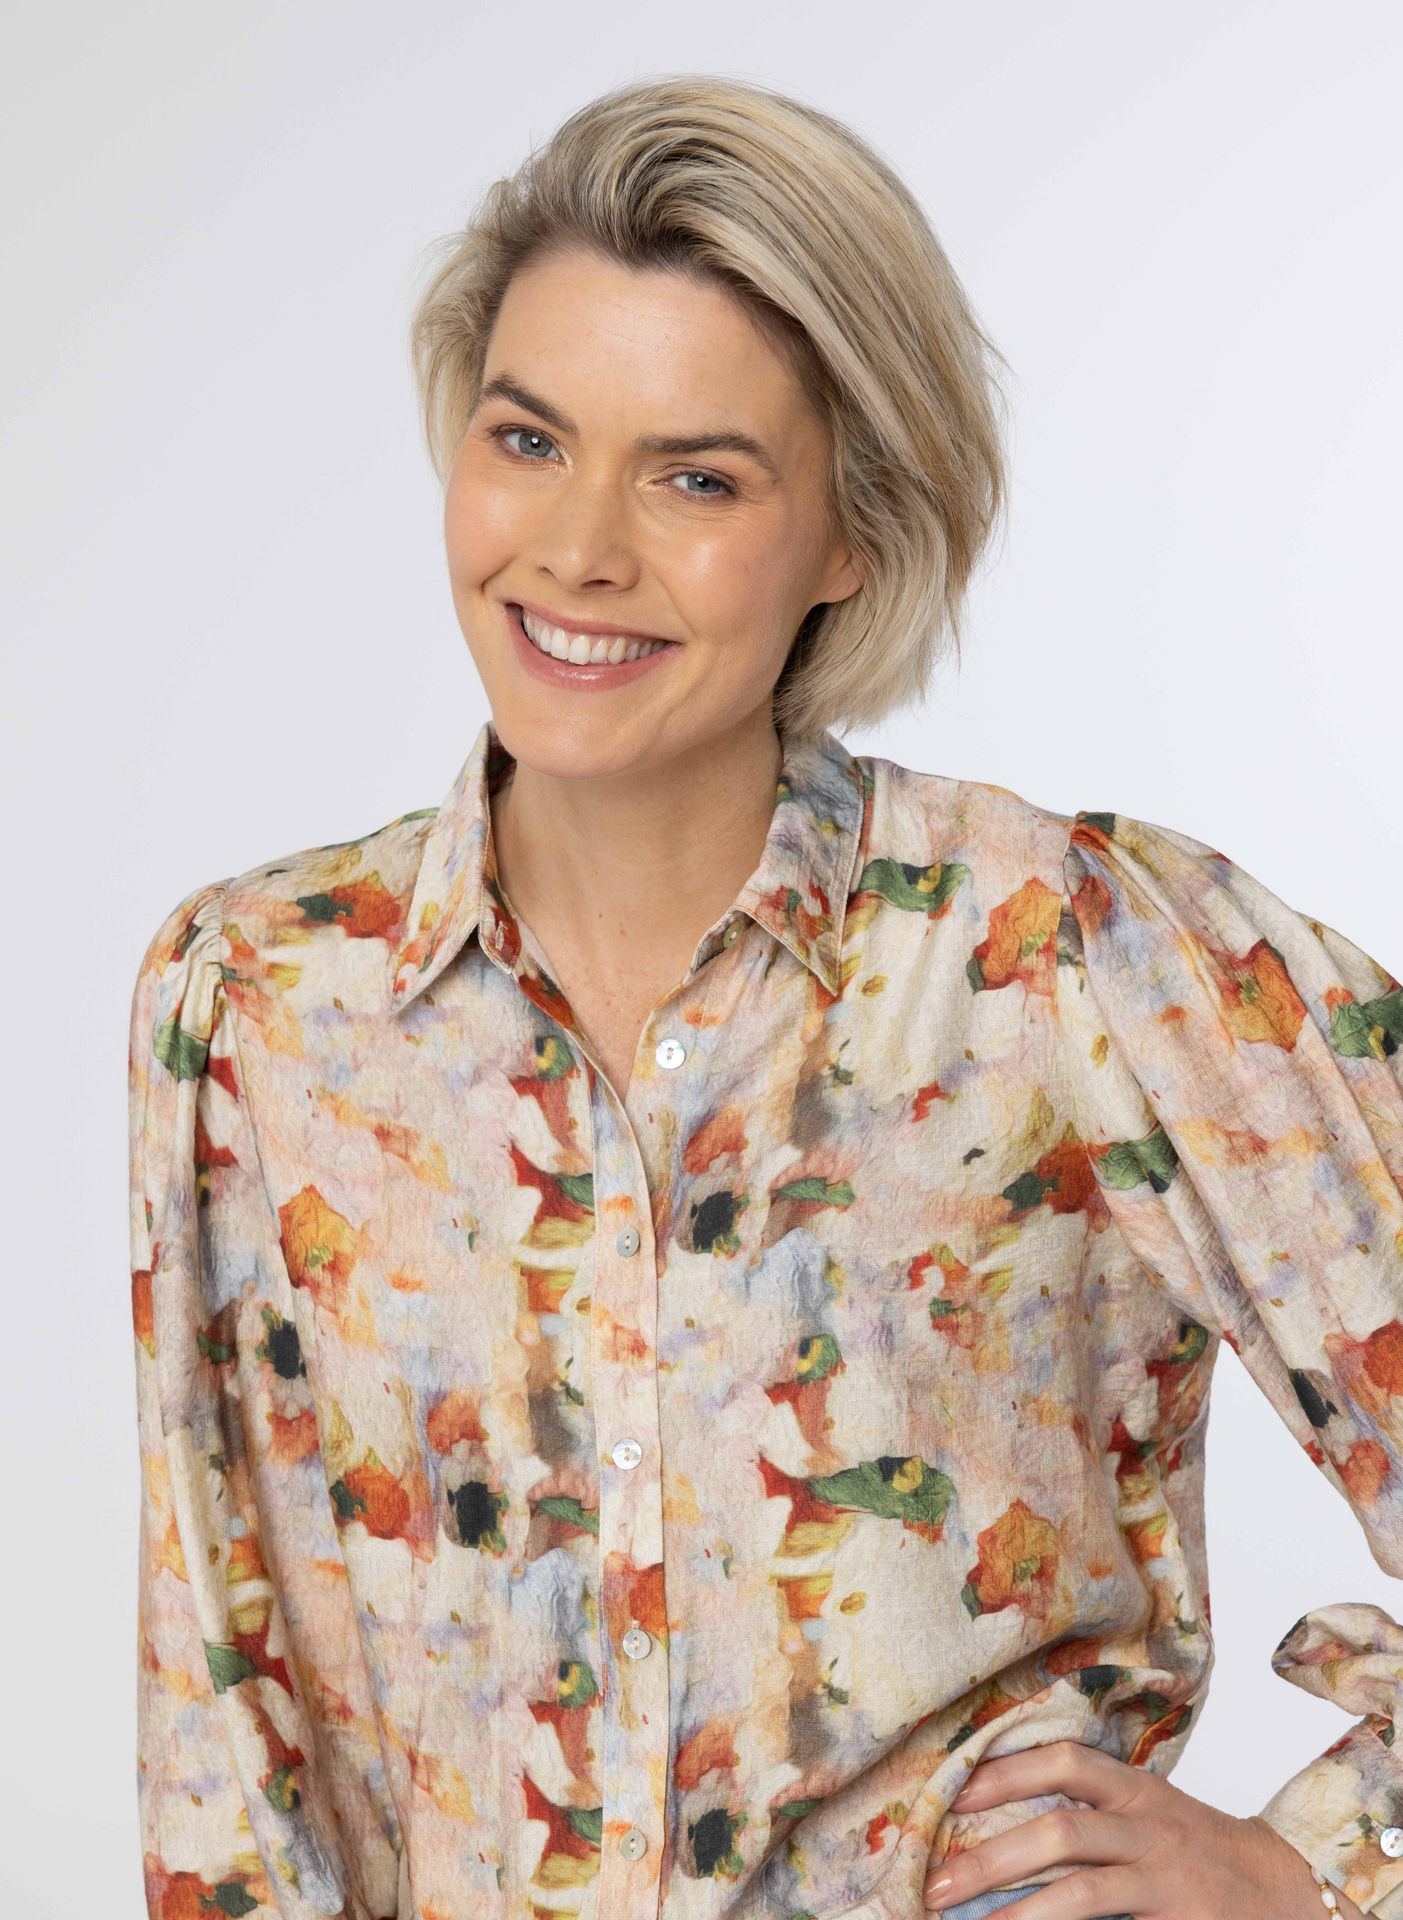 Norah Meerkleurige blouse met bloemenprint multicolor 214247-002